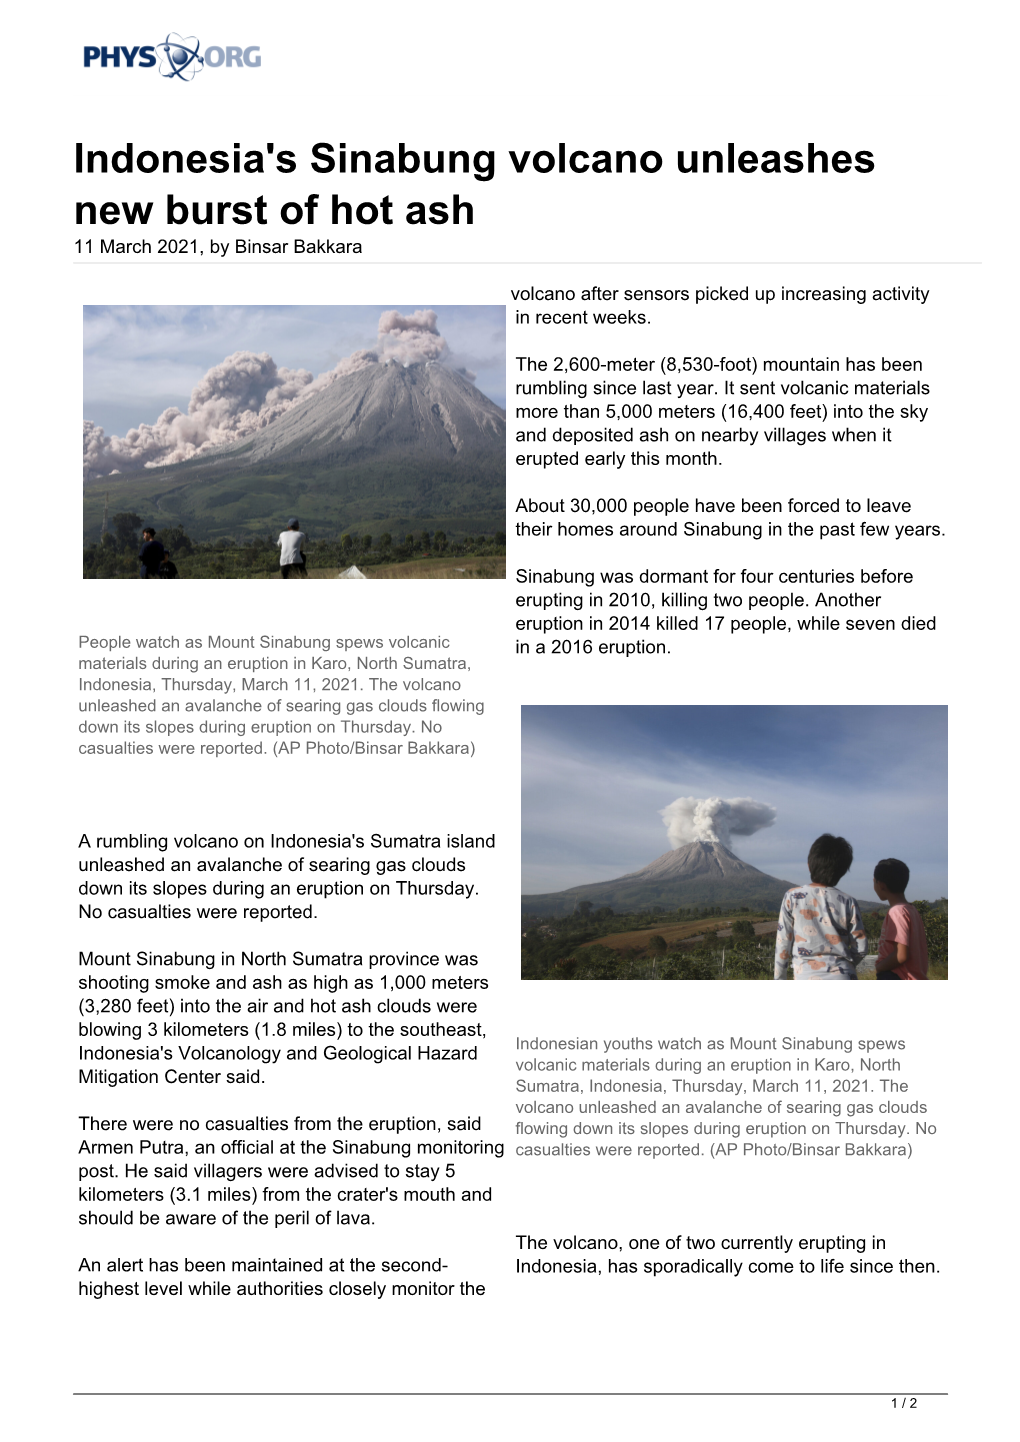 Indonesia's Sinabung Volcano Unleashes New Burst of Hot Ash 11 March 2021, by Binsar Bakkara